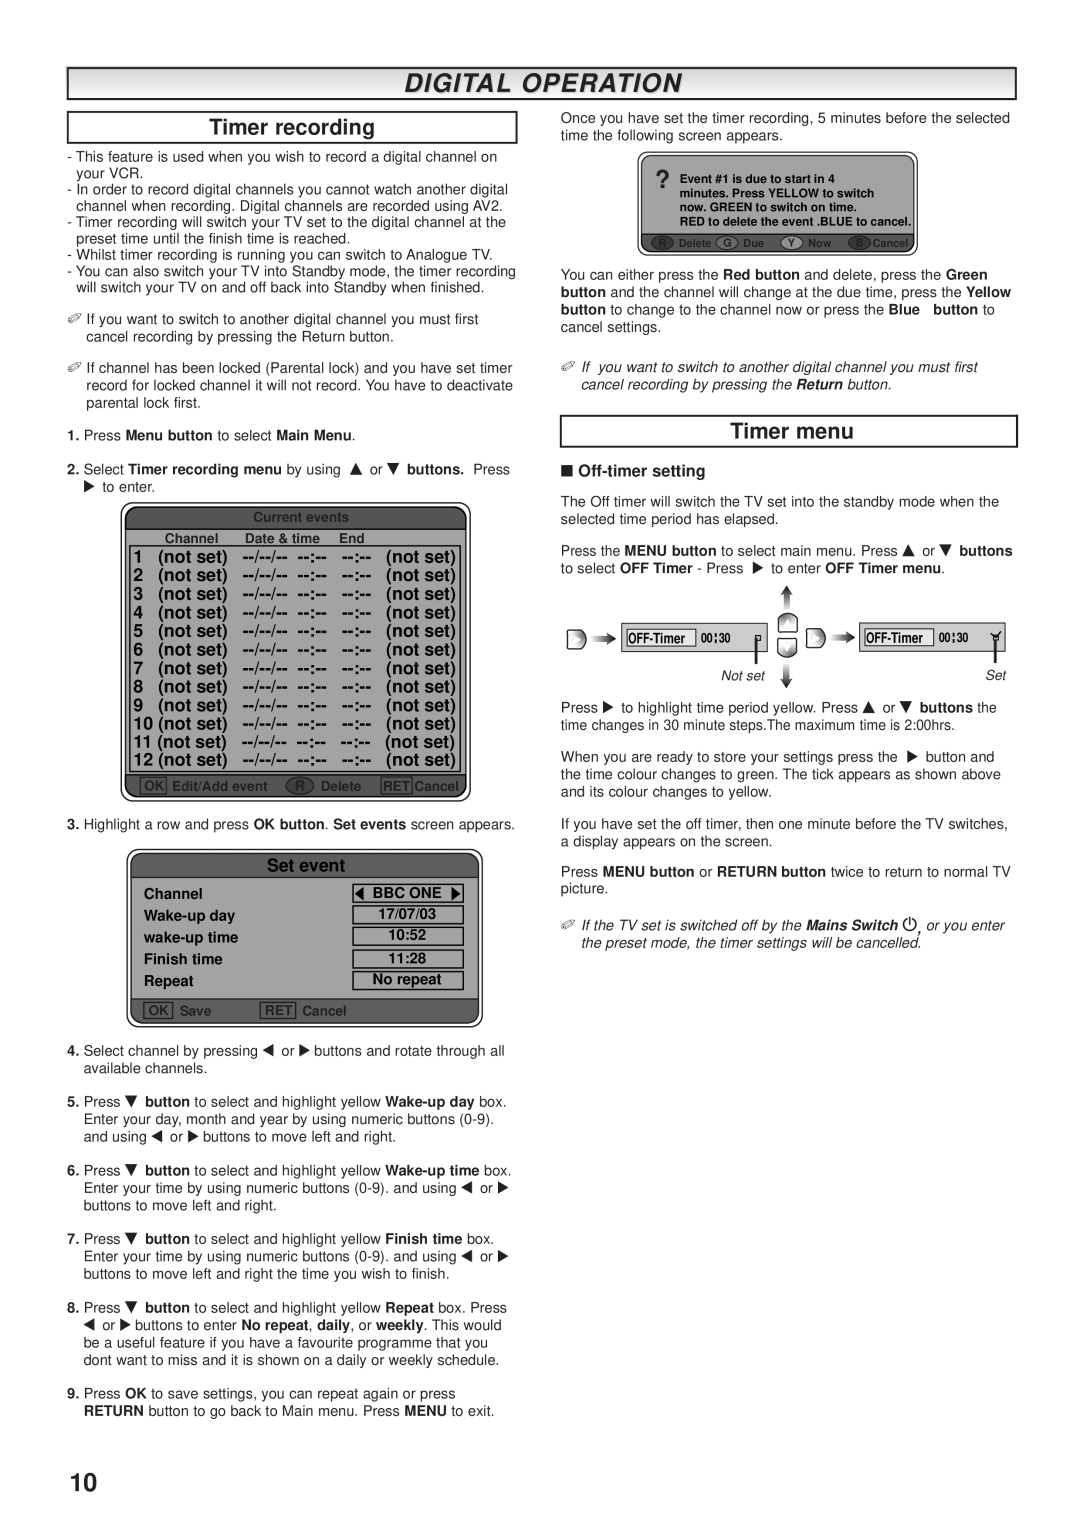 Sanyo CE32DFN2-B instruction manual Timer recording, Timer menu, Digital Operation, Off-timer setting 